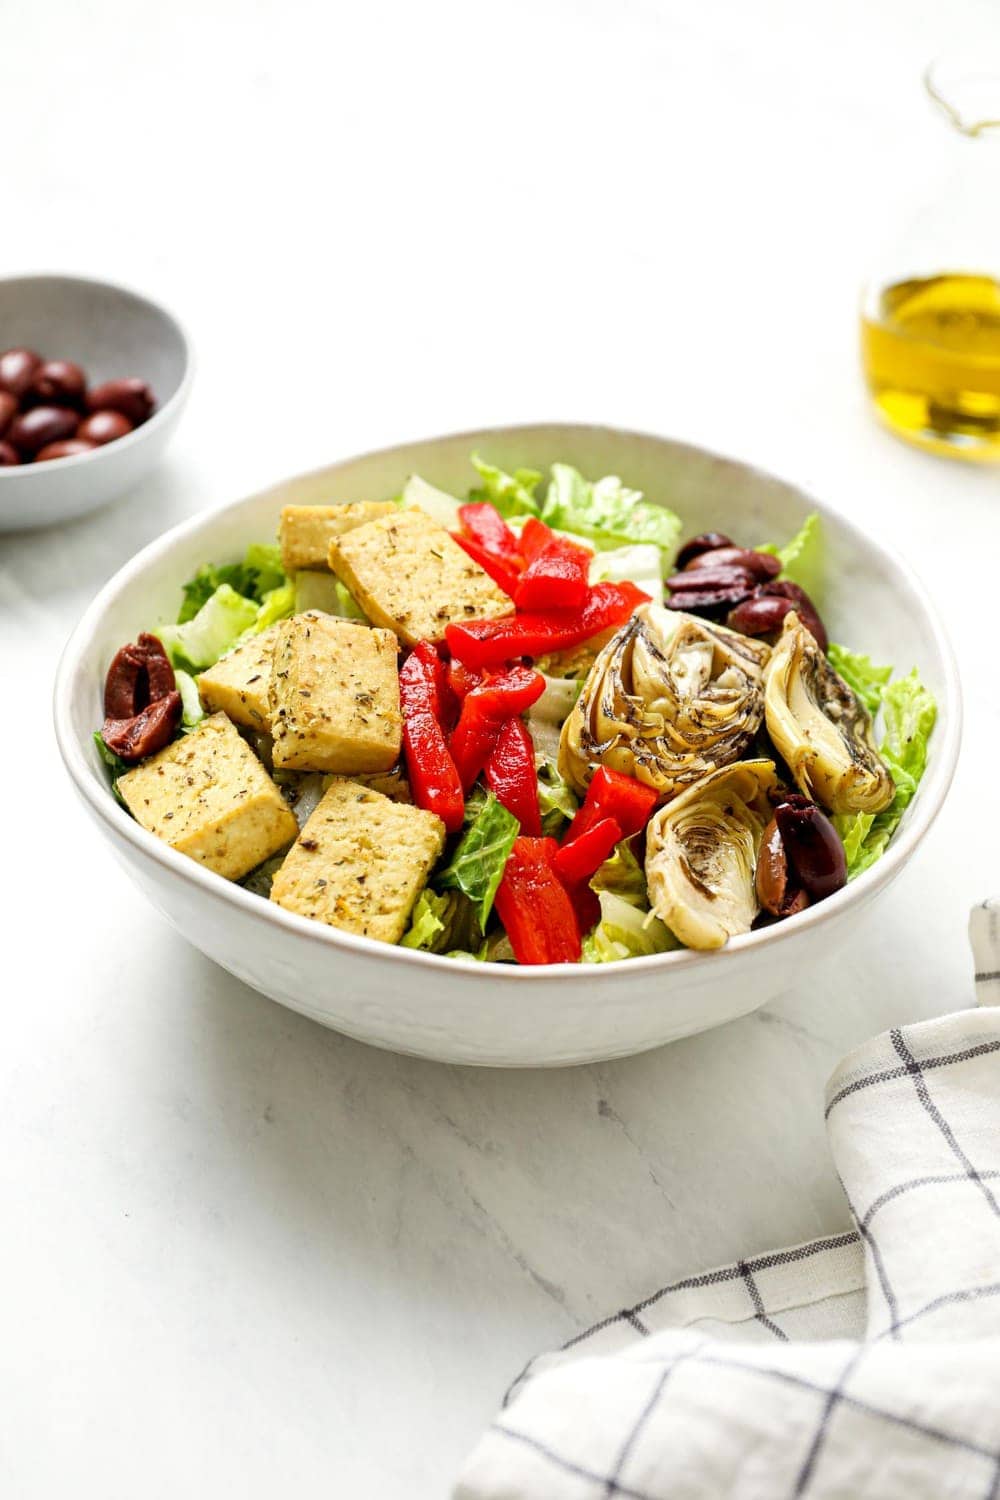 Italian chef salad with kalamata olives, and vegan lemon herb baked tofu.